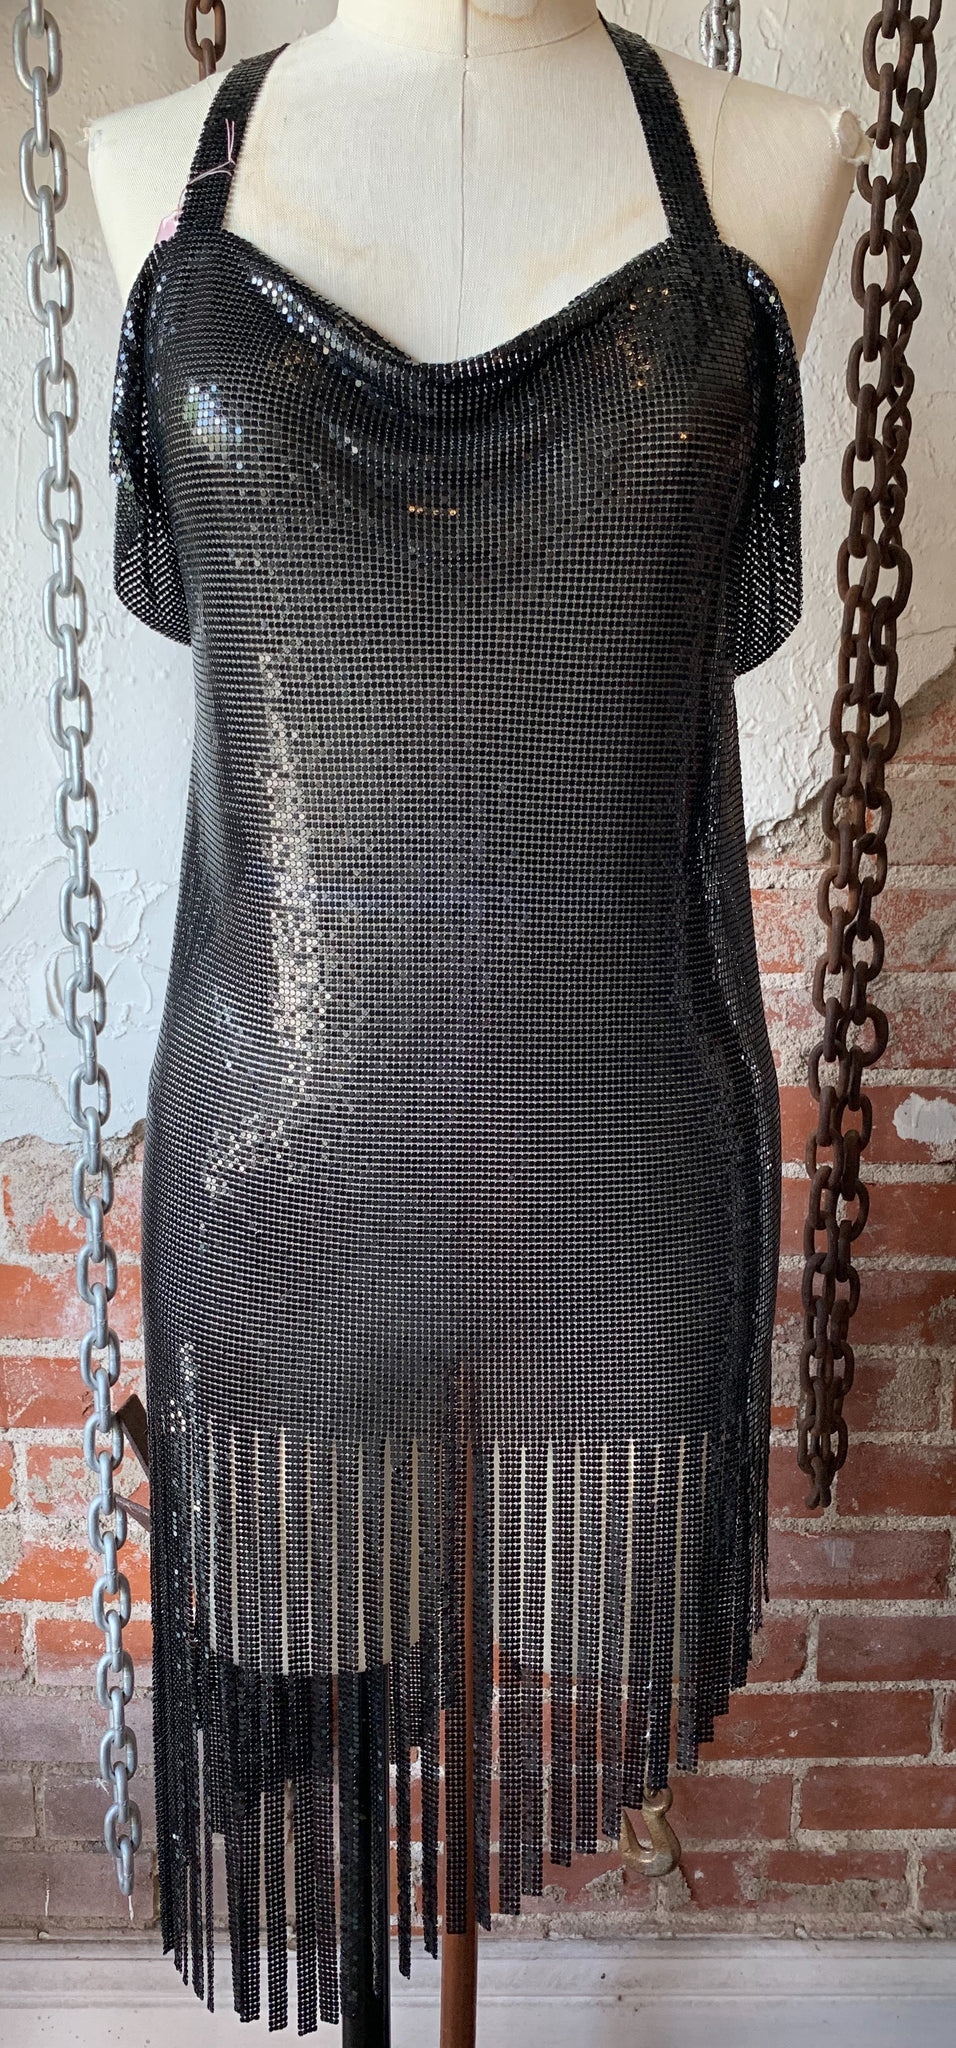 Starshine Fringe ChainMail Dress